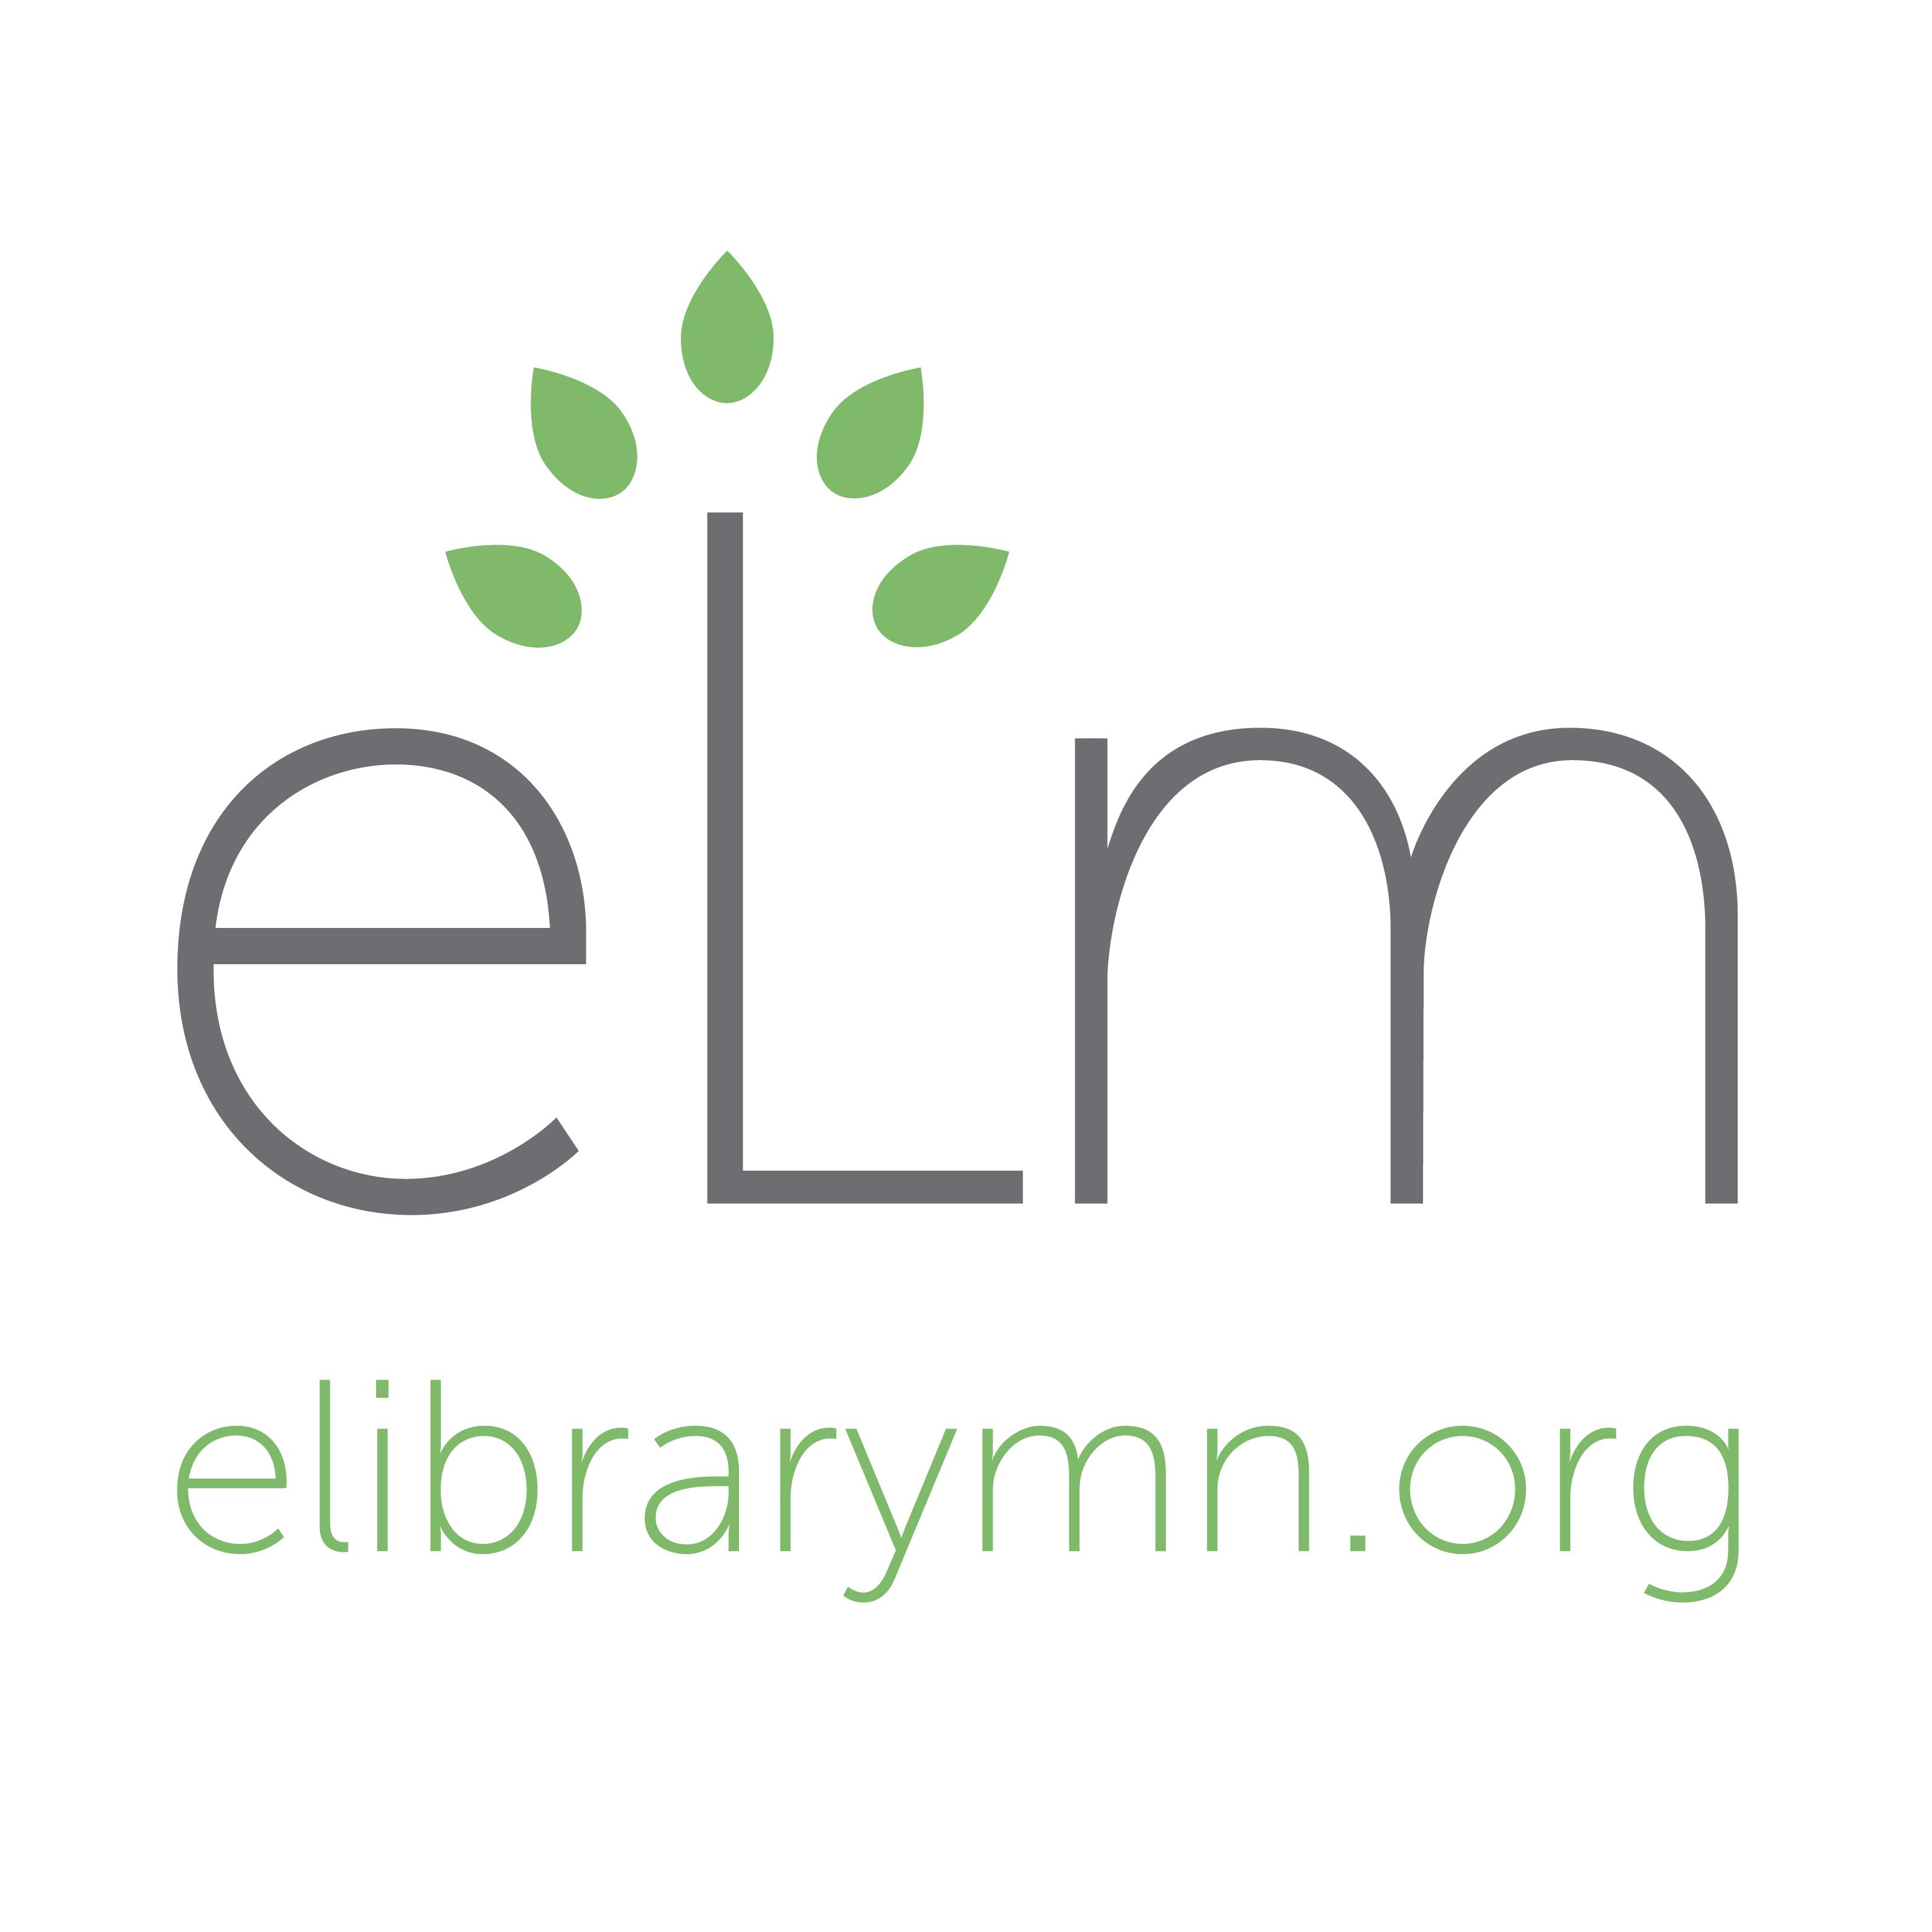 Elm logo header with URL below